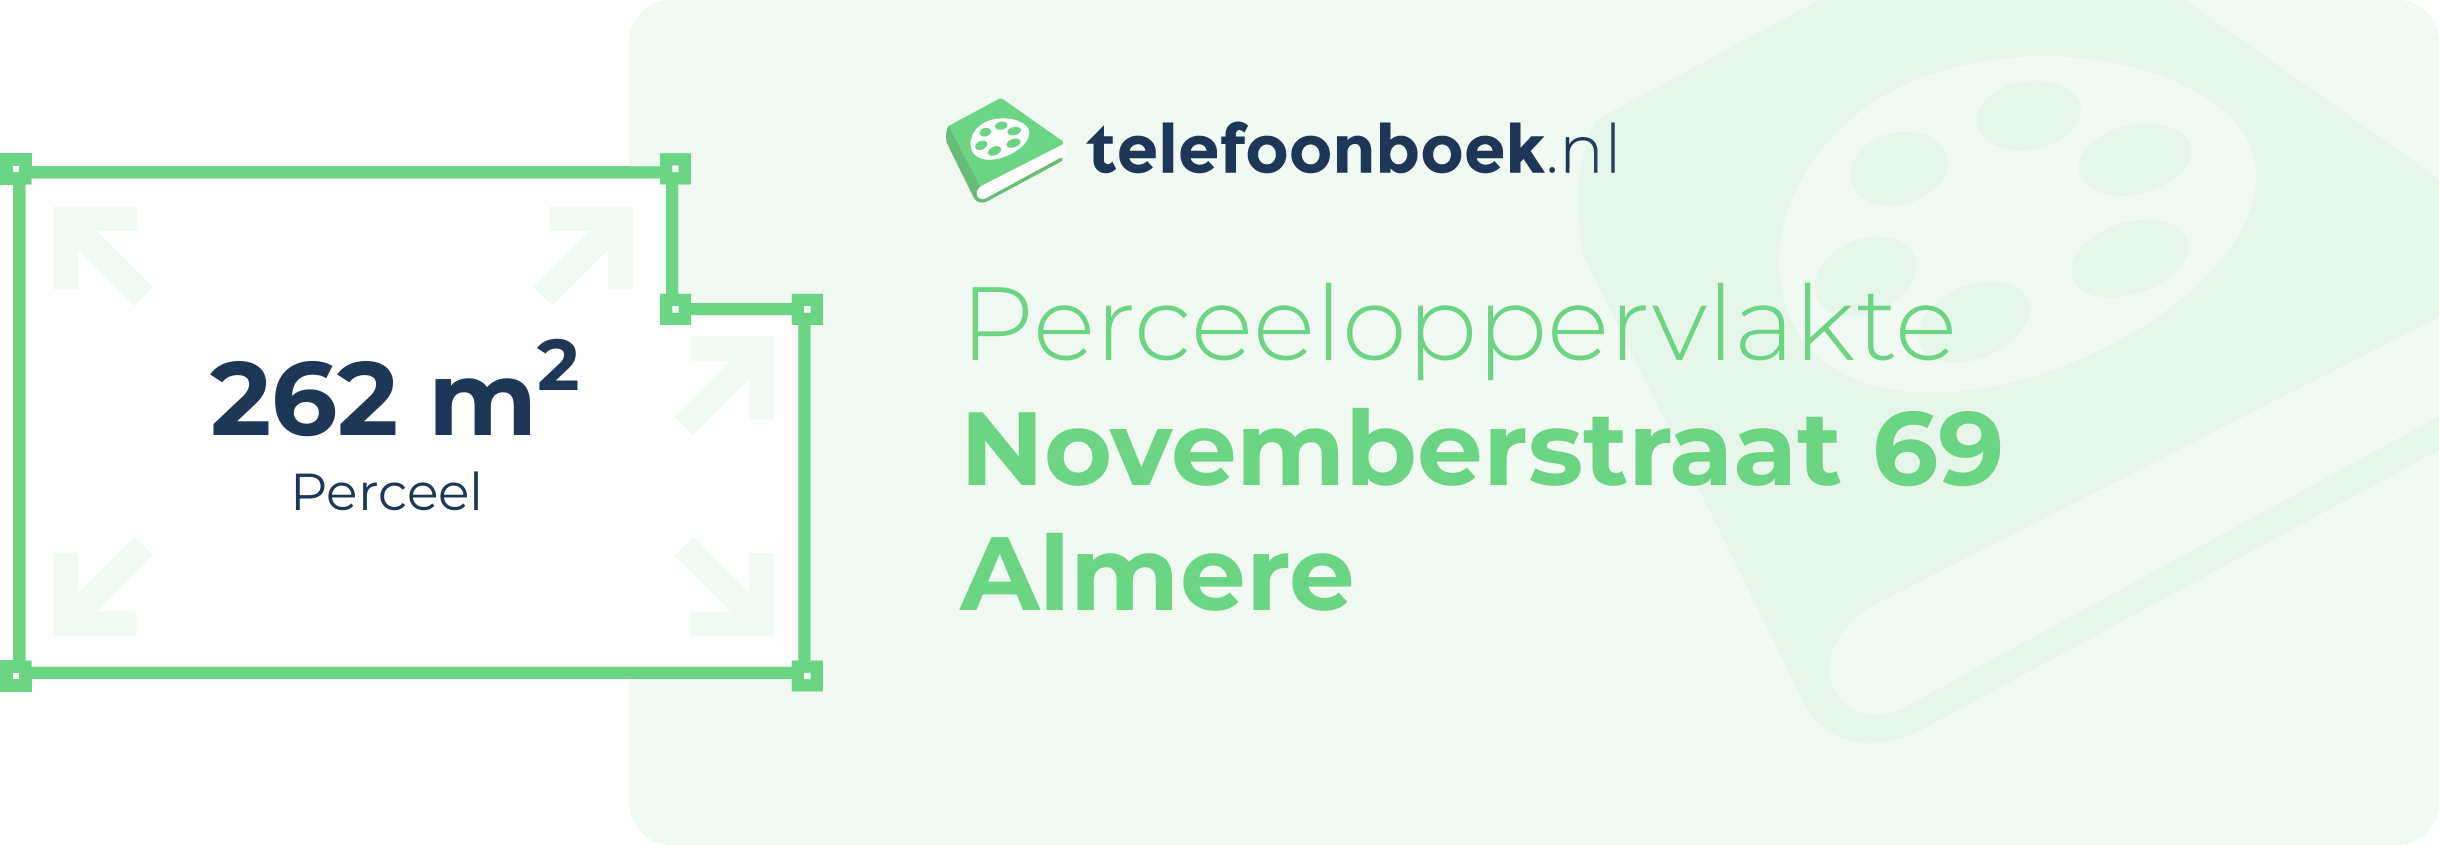 Perceeloppervlakte Novemberstraat 69 Almere